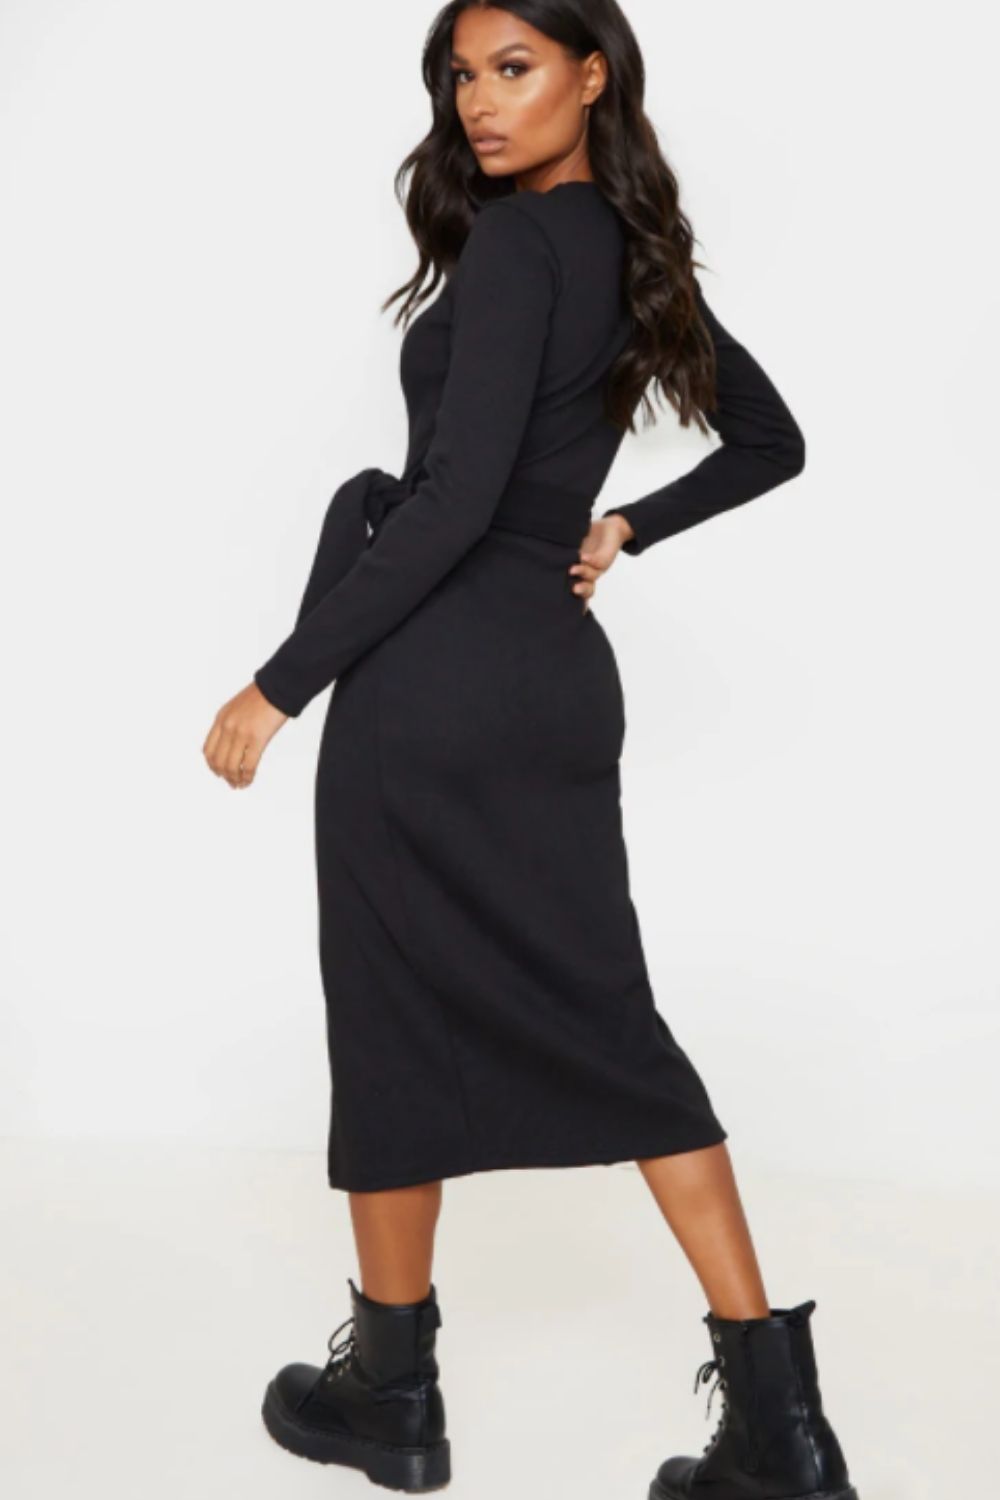 Black Satin Dress - Long Sleeve Midi Dress - Stretch Satin Dress - Lulus